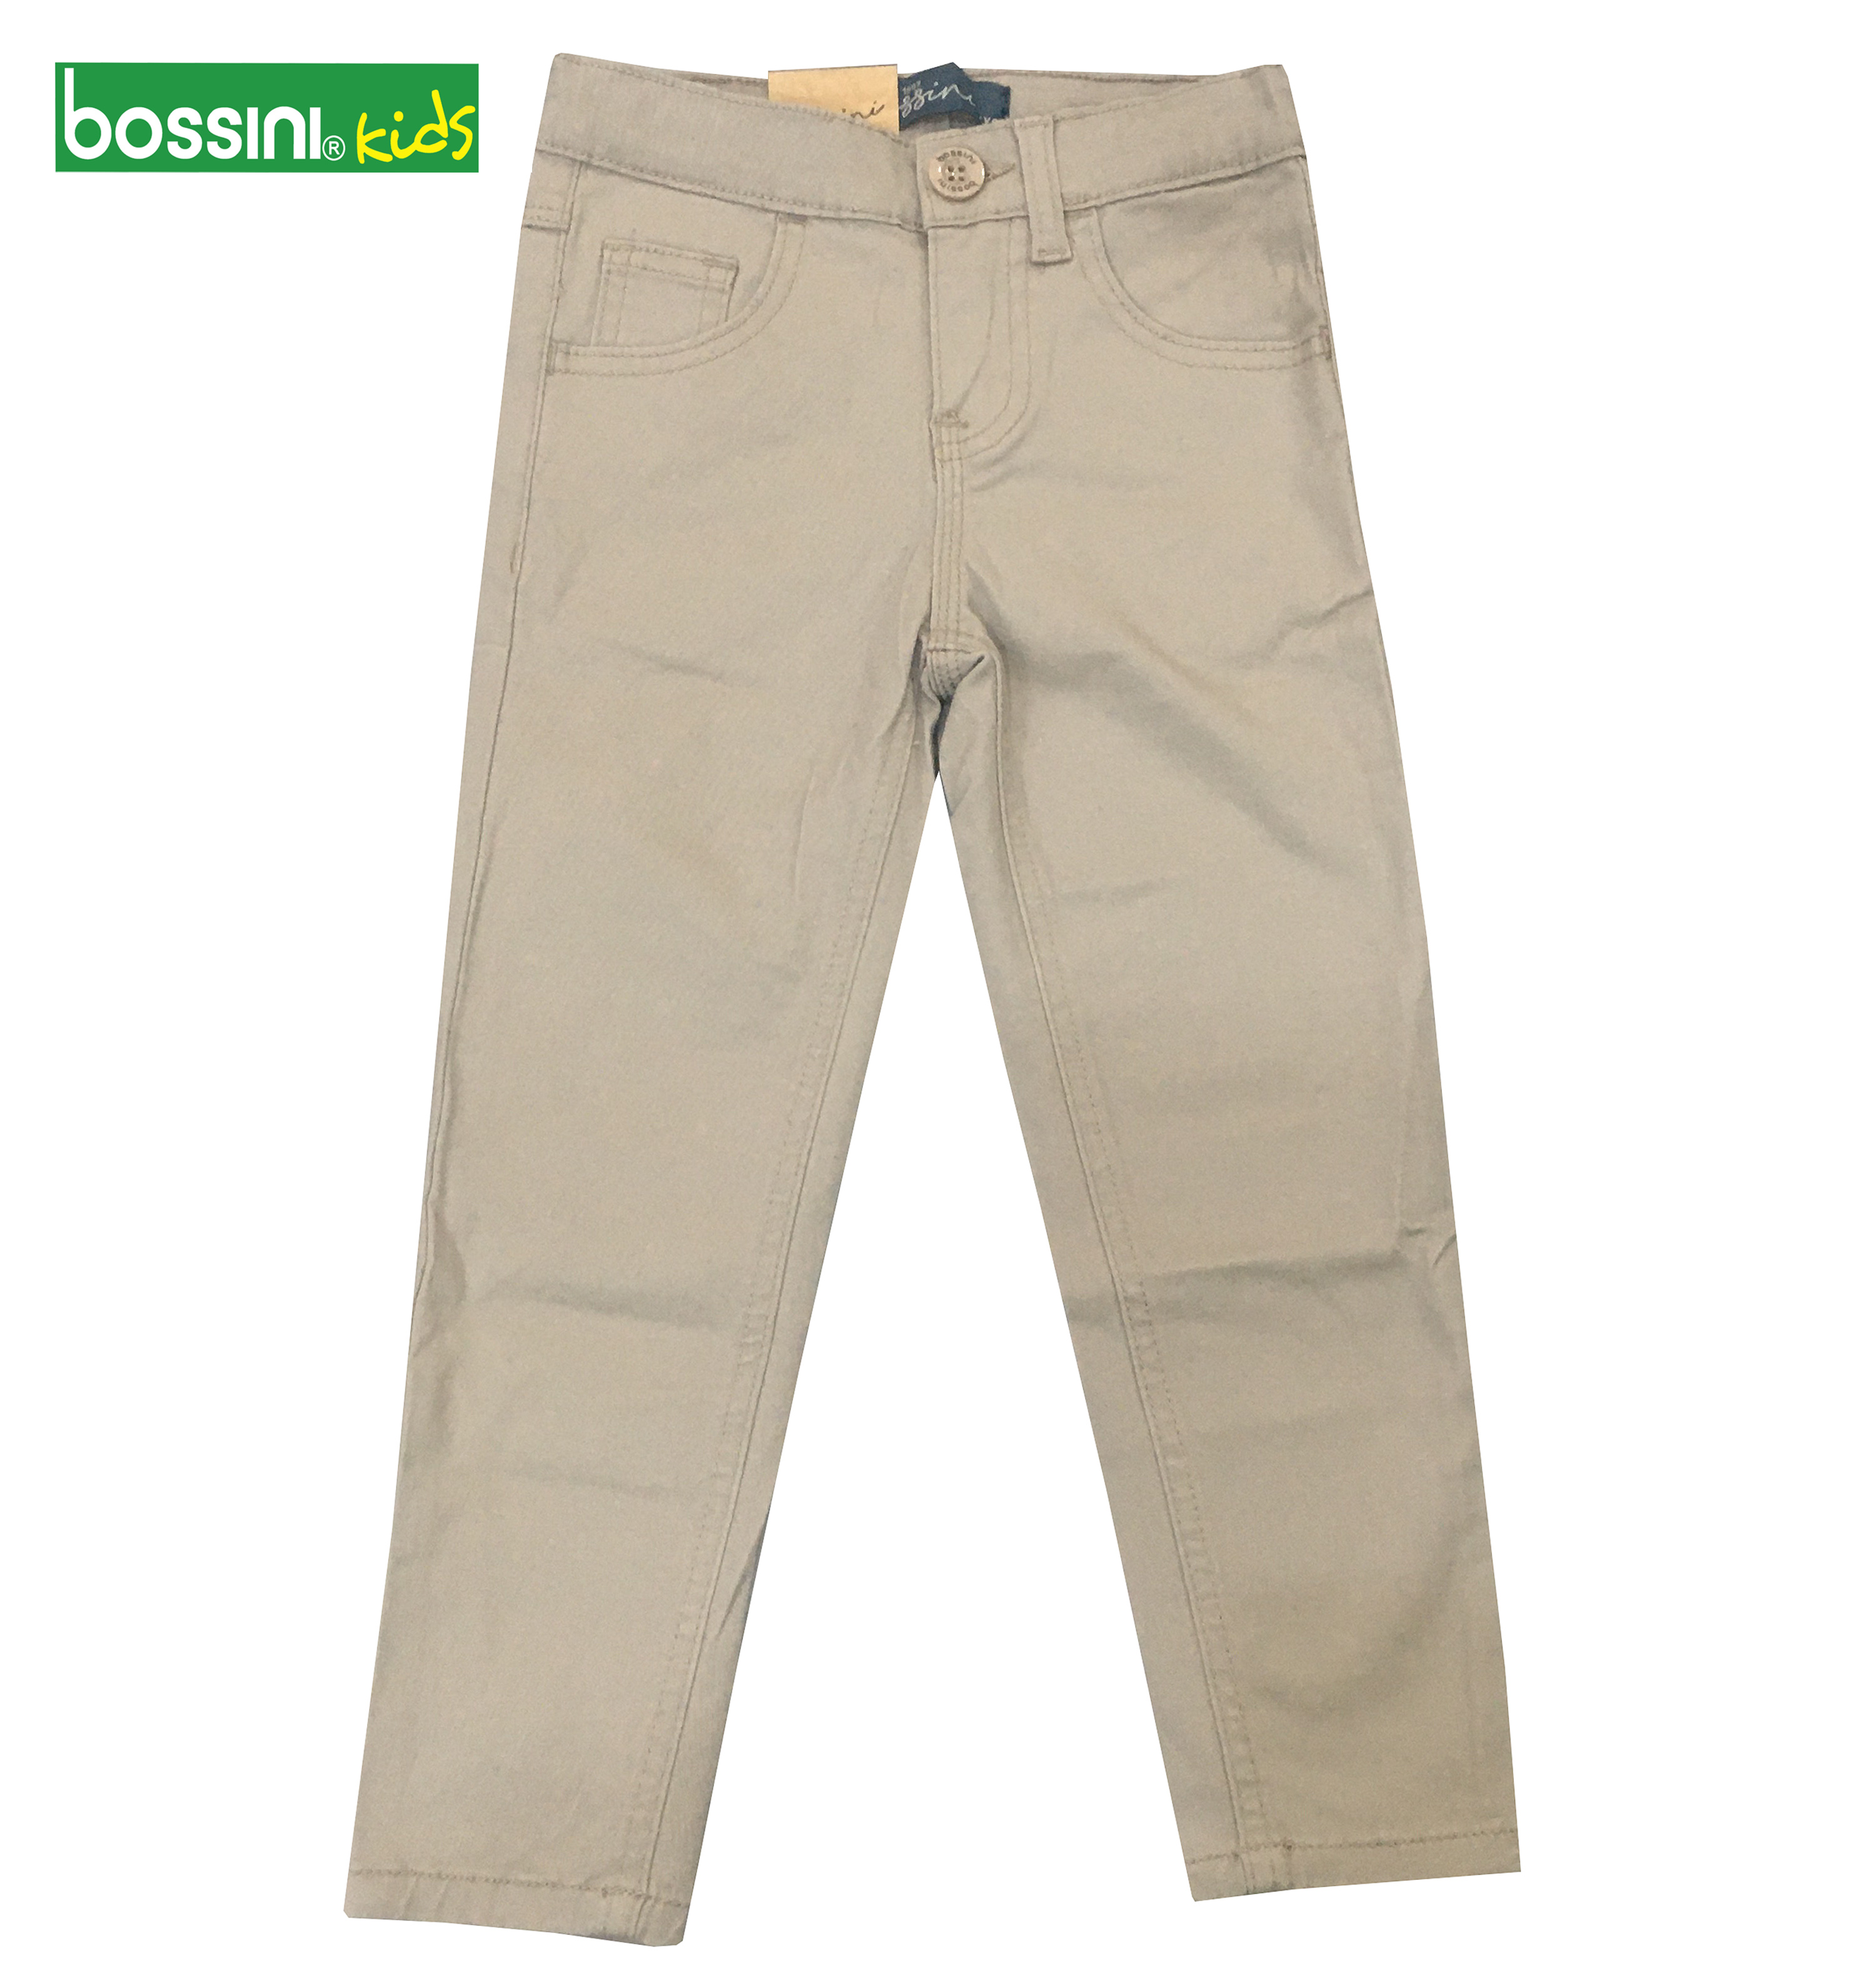 BNWT Bossini Mens Size 38 Regular Fit Pants Grey RRP $69.95-1556182(s)